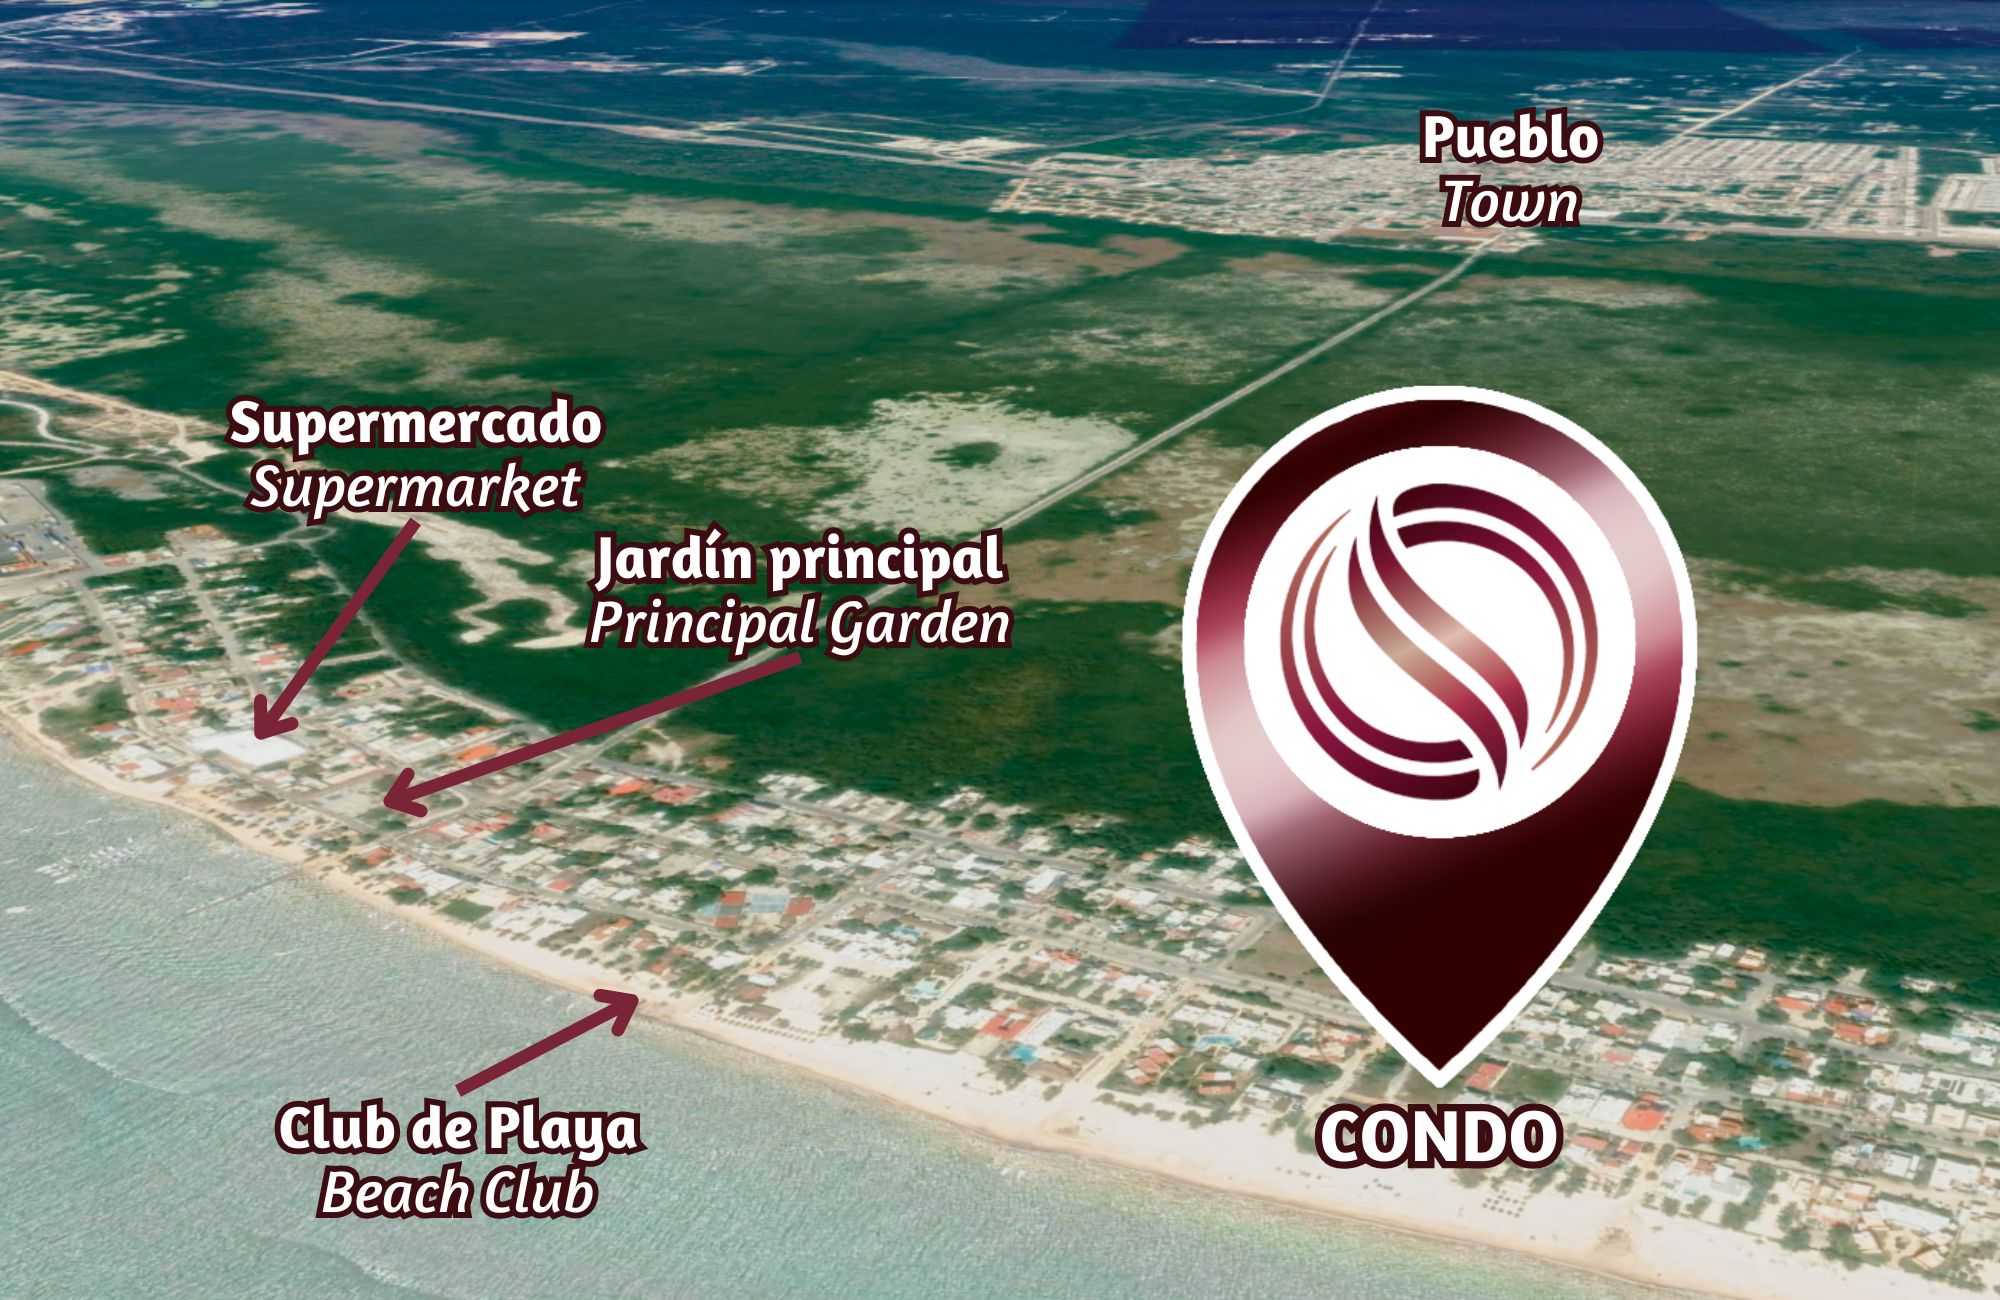 Sea view condominium with terrace, private Jacuzzi, pre-construction, for sale in Puerto Morelos.